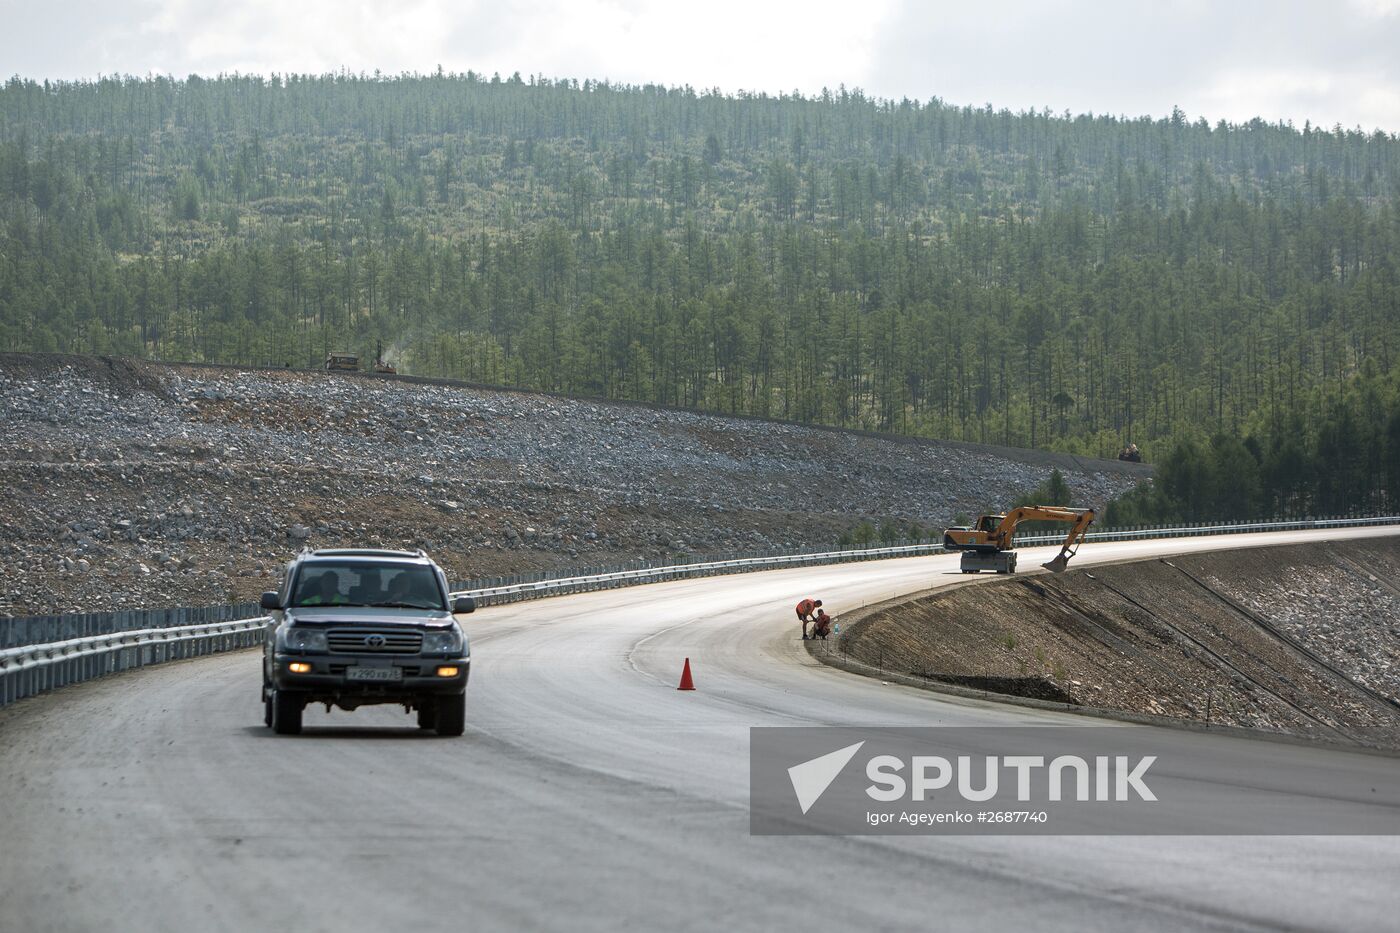 Lena federal highway under renovation in Amur River region